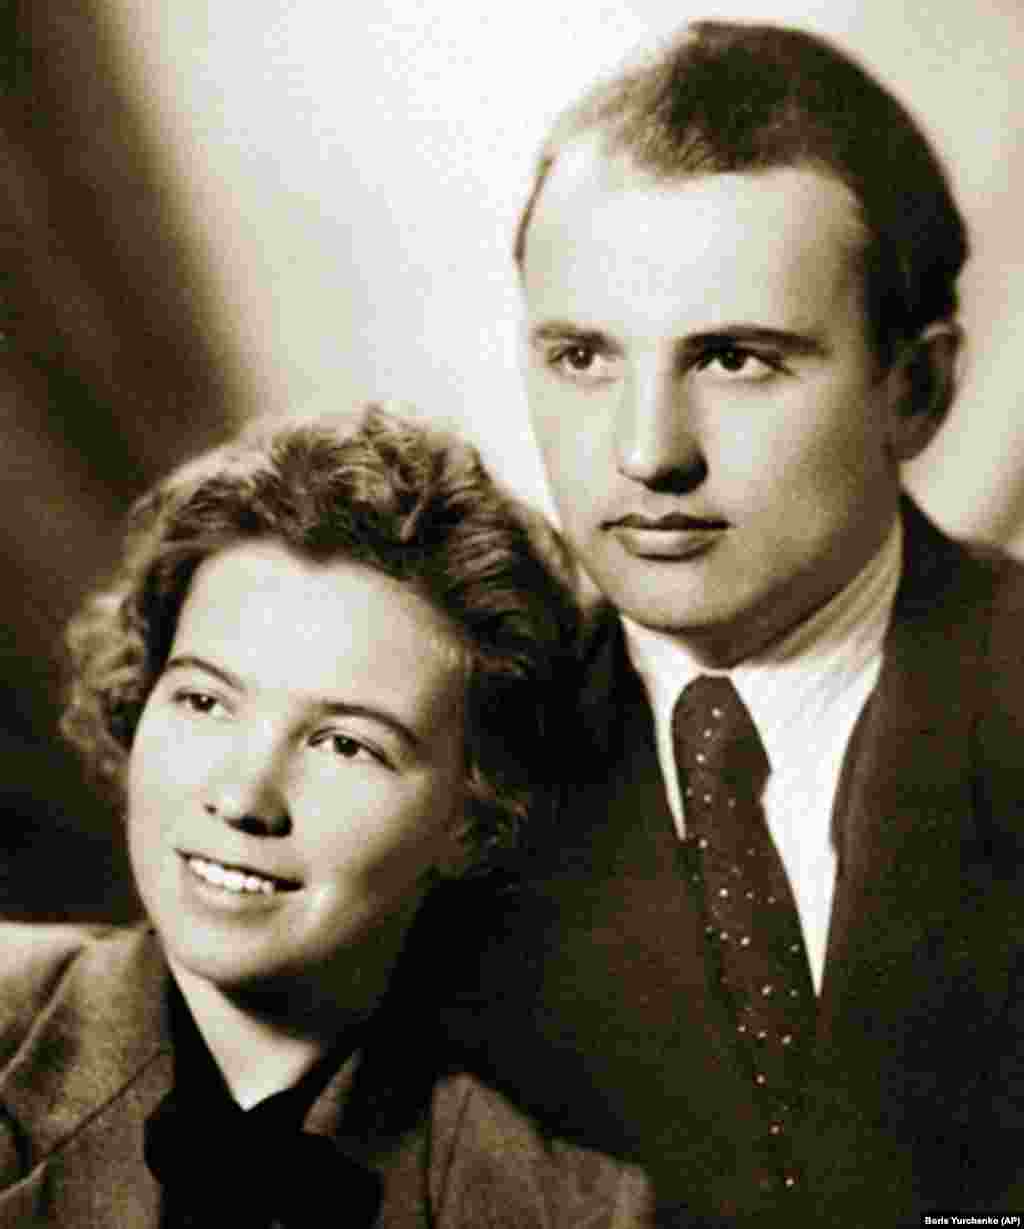 Раиса һәм Михаил Горбачевлар портреты. Алар 1953 елның сентябрендә өйләнешә һәм 1999 елда Раиса ханым лейкоздан вафат булганга кадәр 46 ел бергә гомер итә.